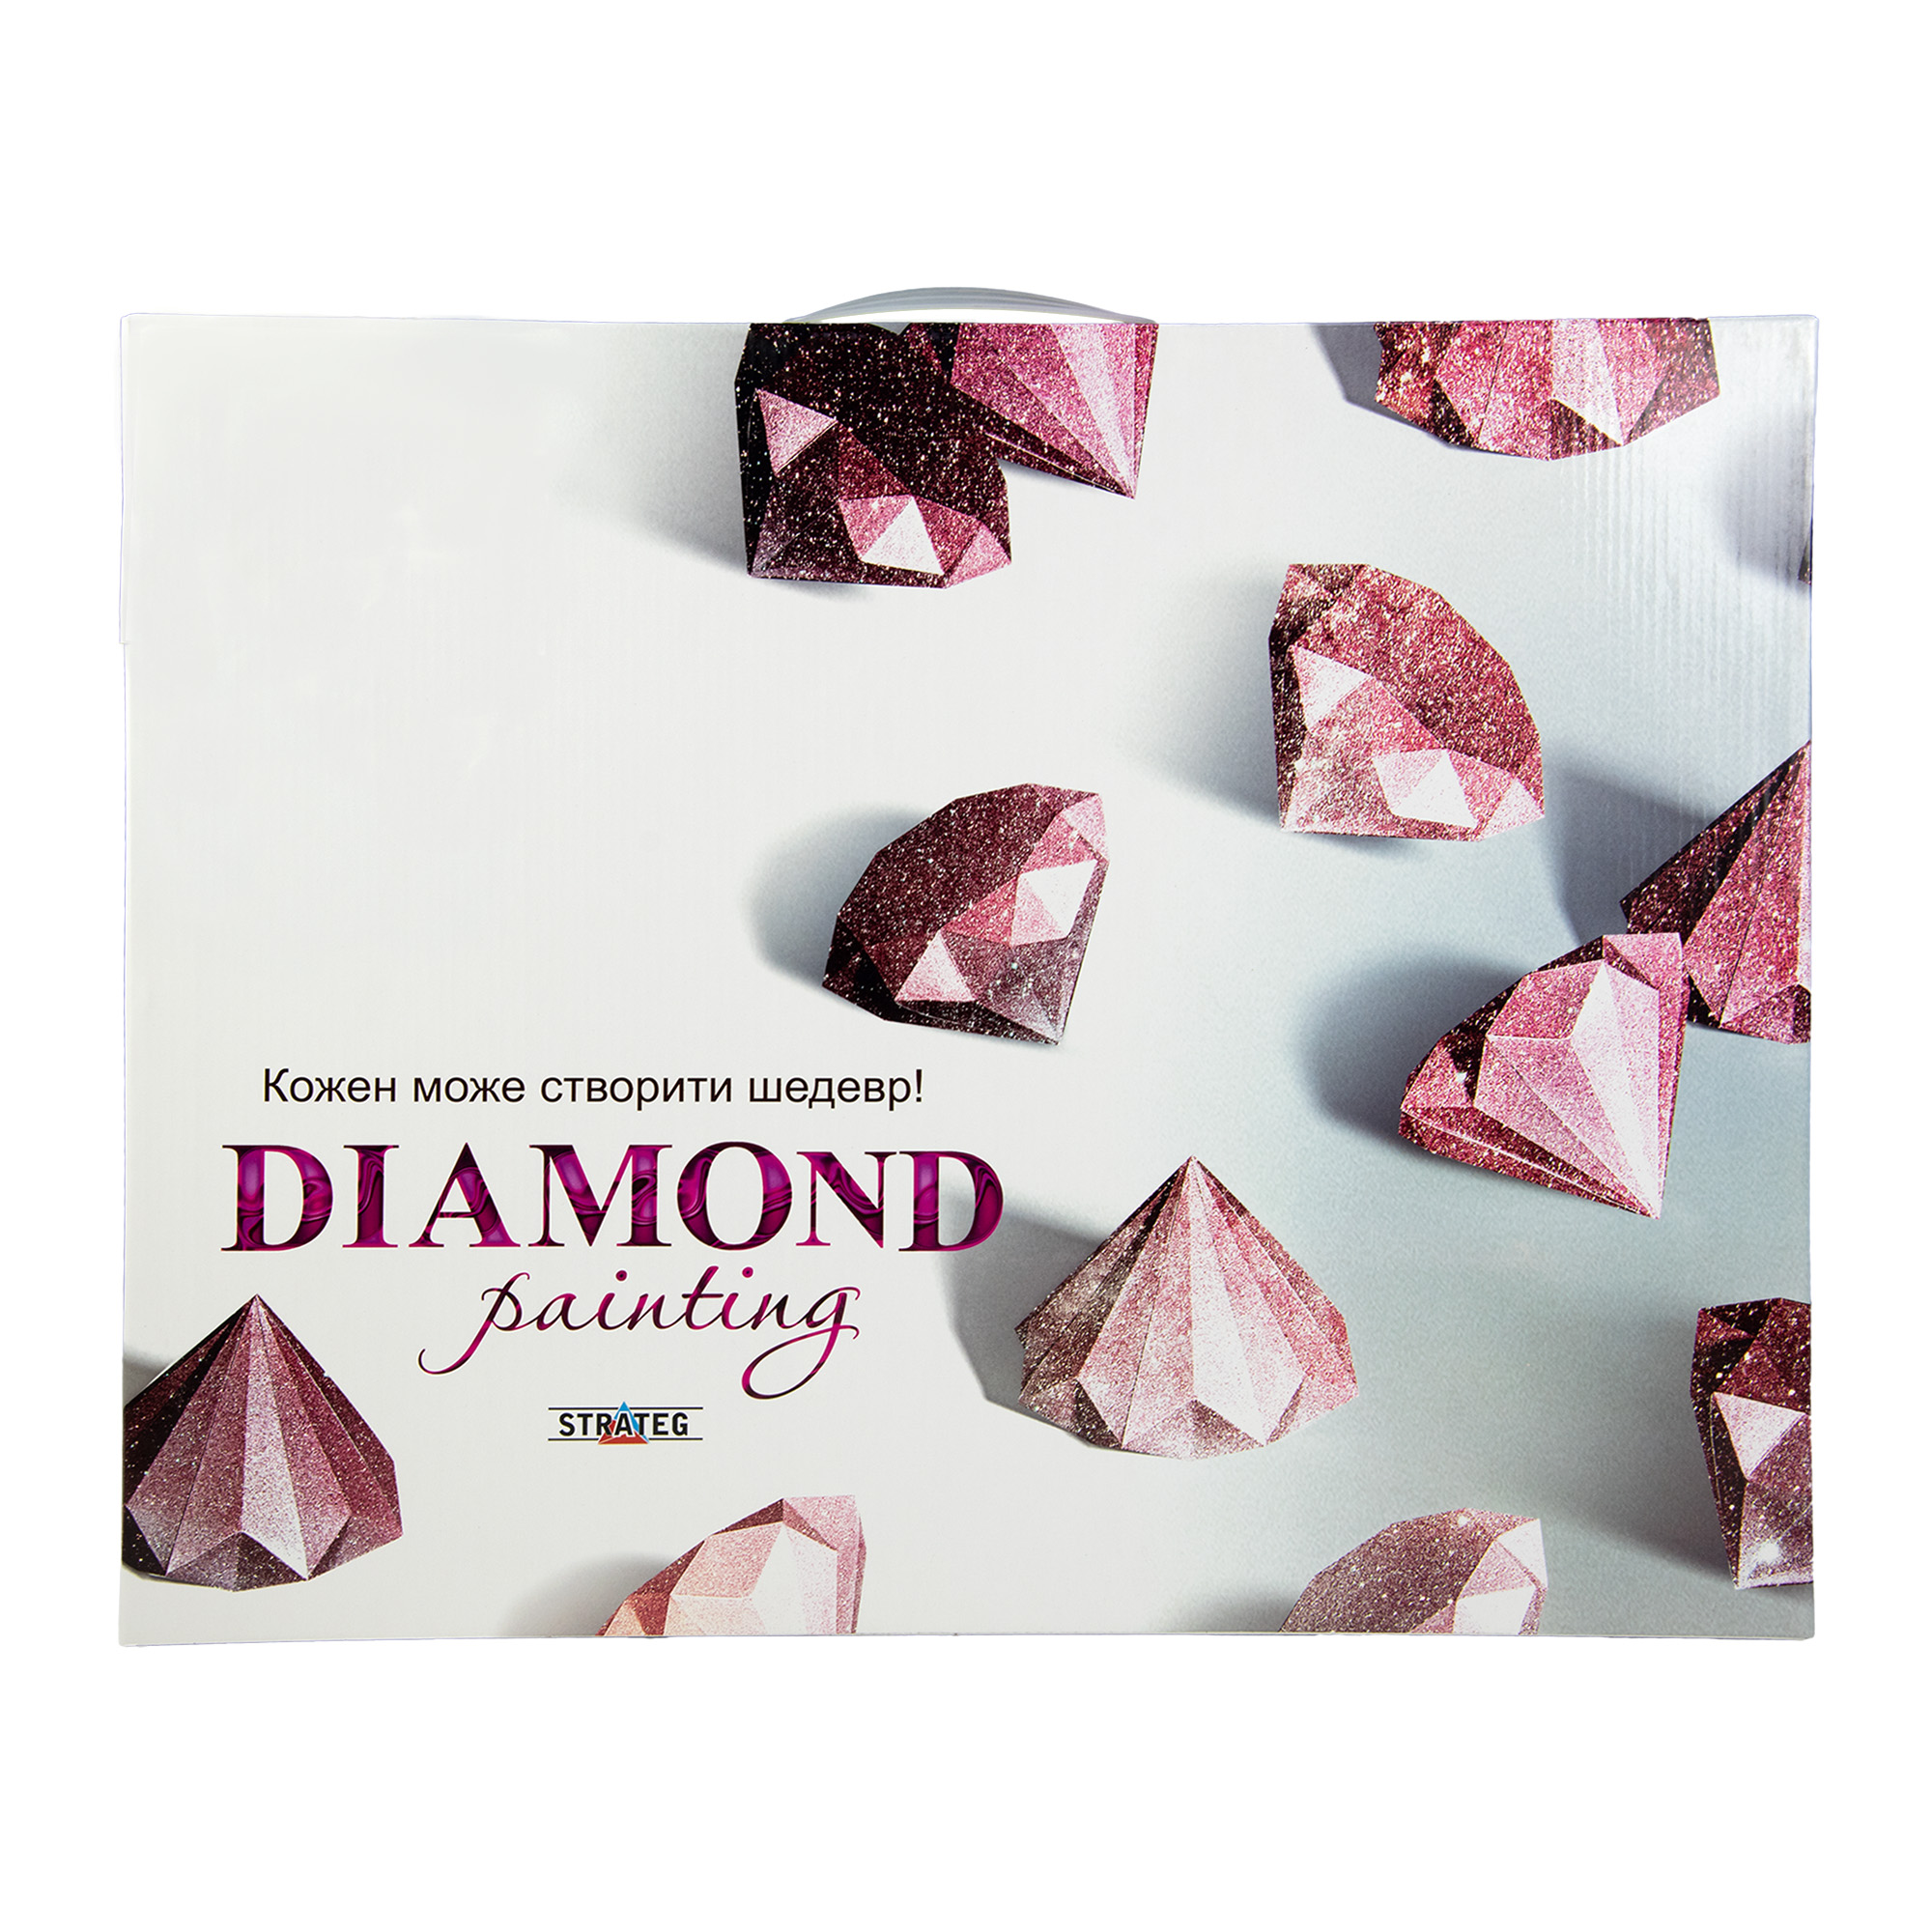 Diamantmosaik Strateg PREMIUM Helle Muster 30x30 cm groß (ME13821)